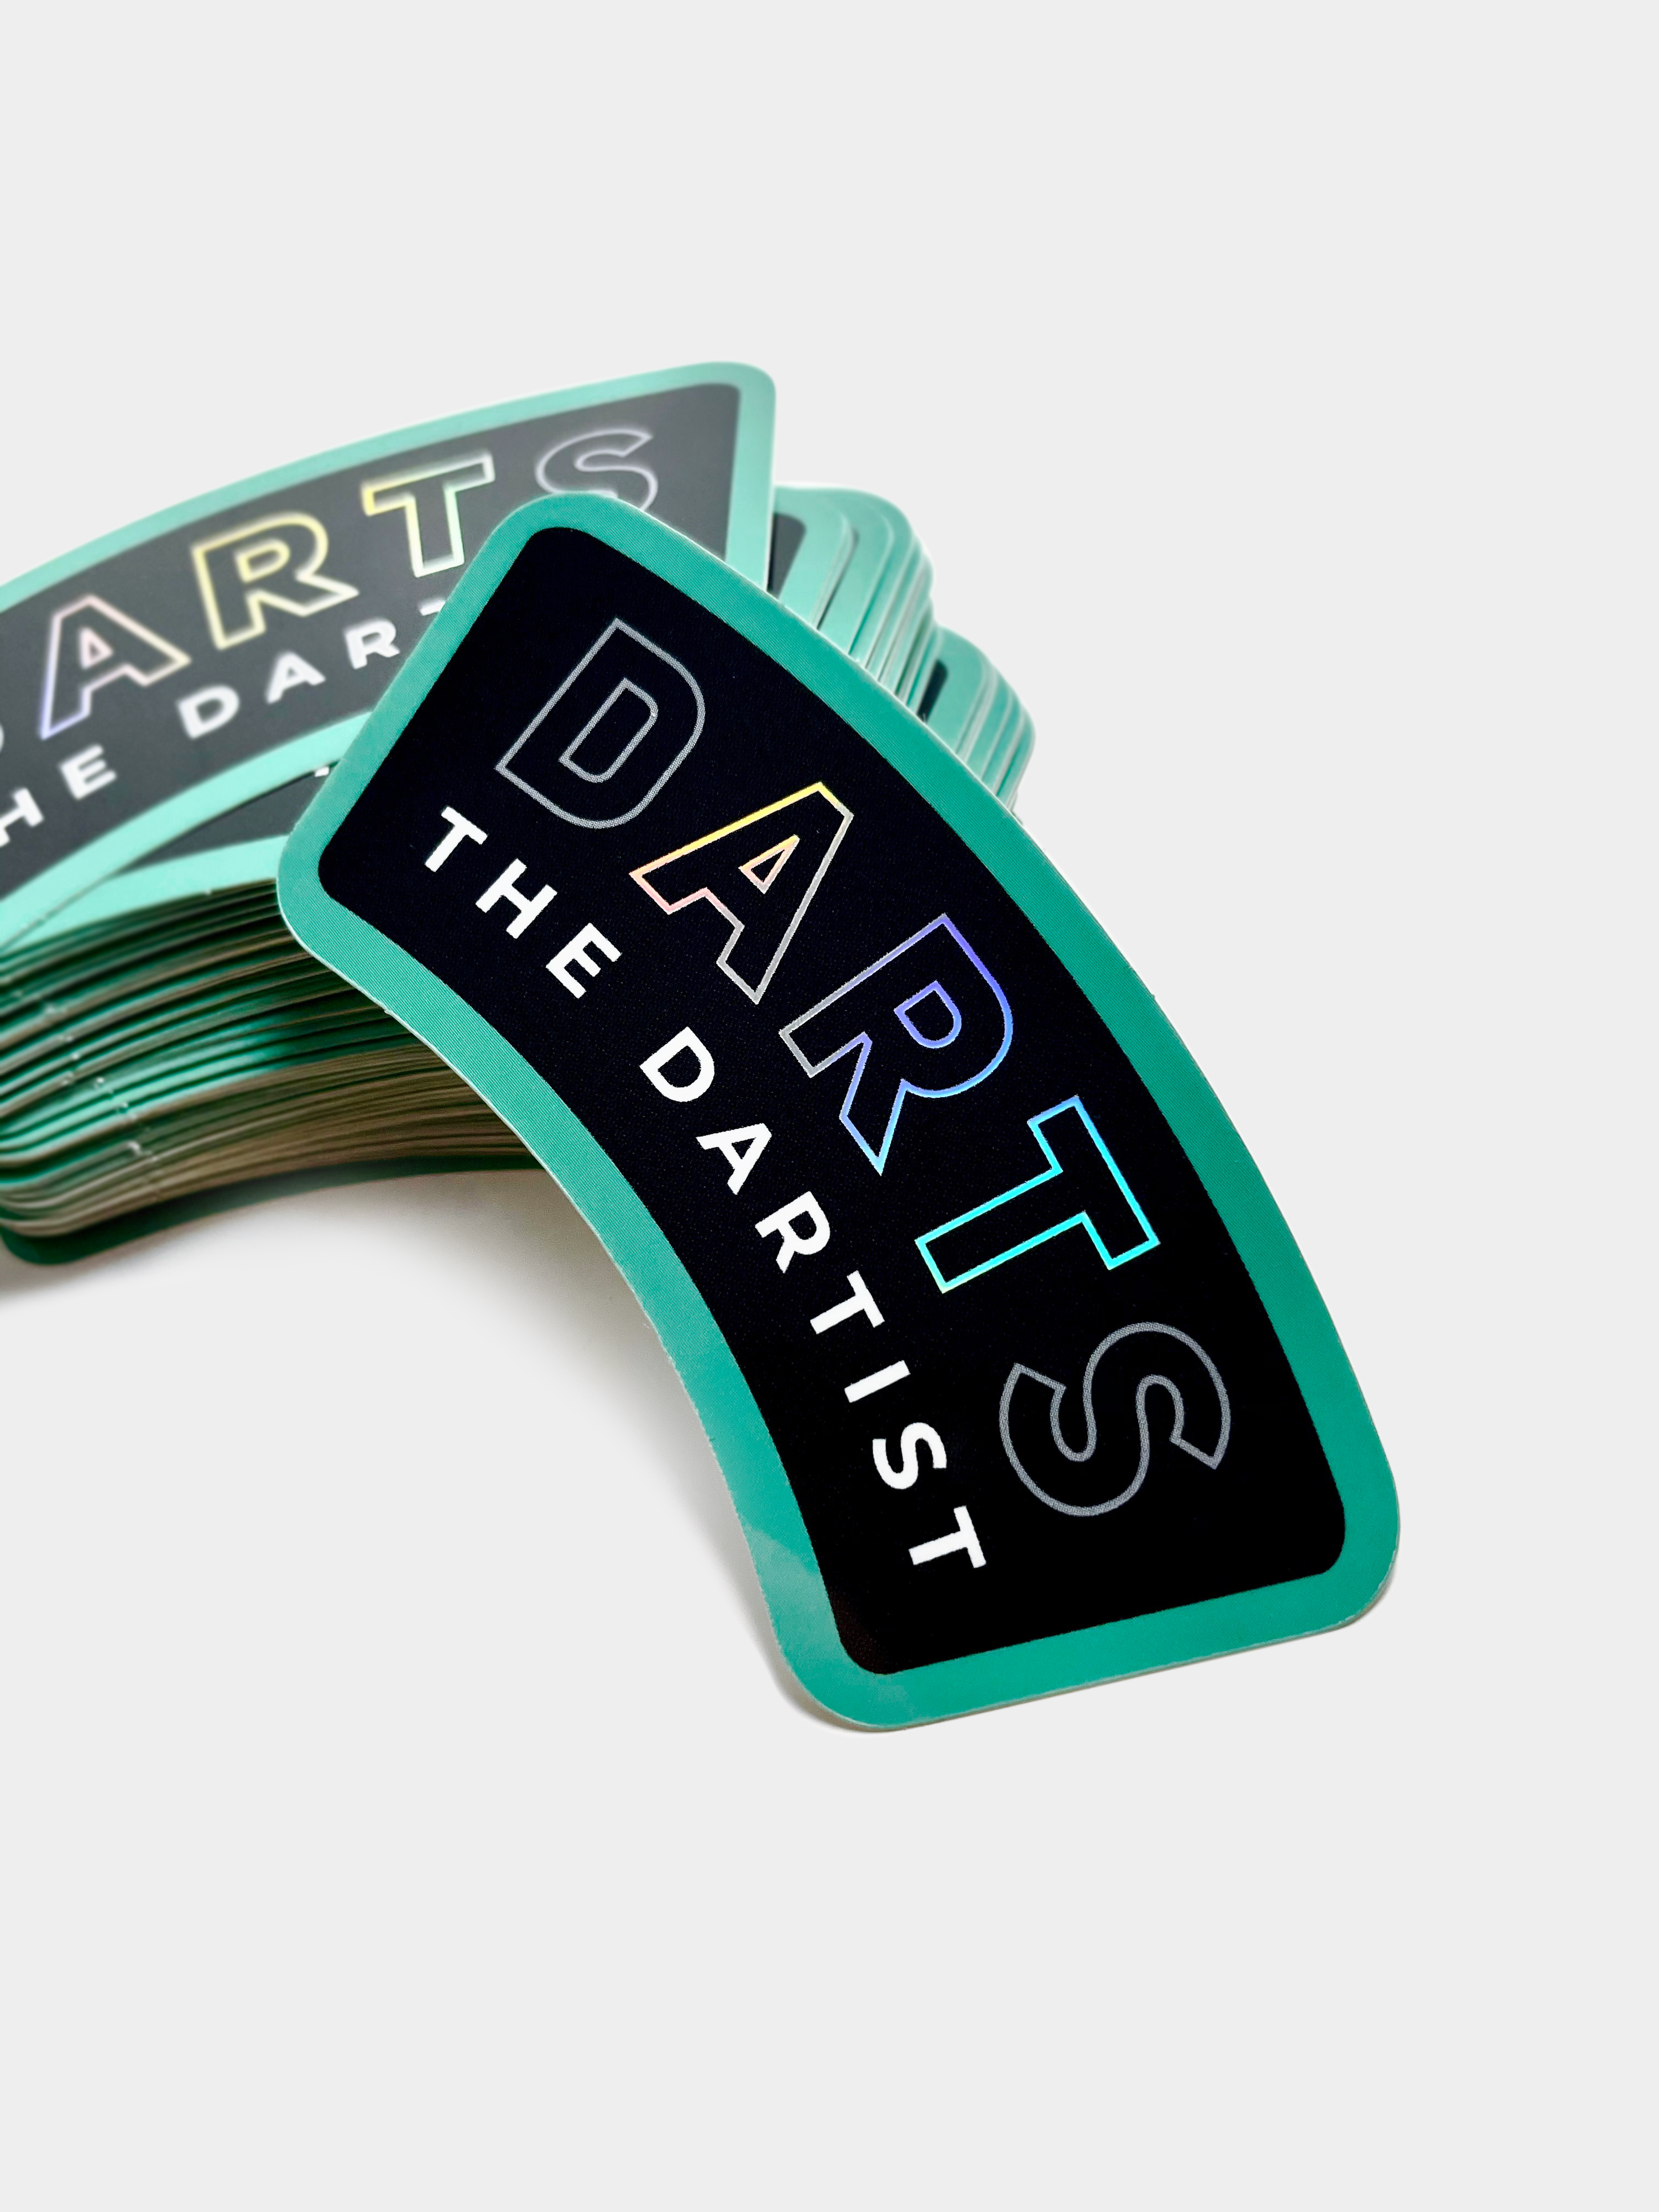 Dartist Holographic Stickers - The Dartist